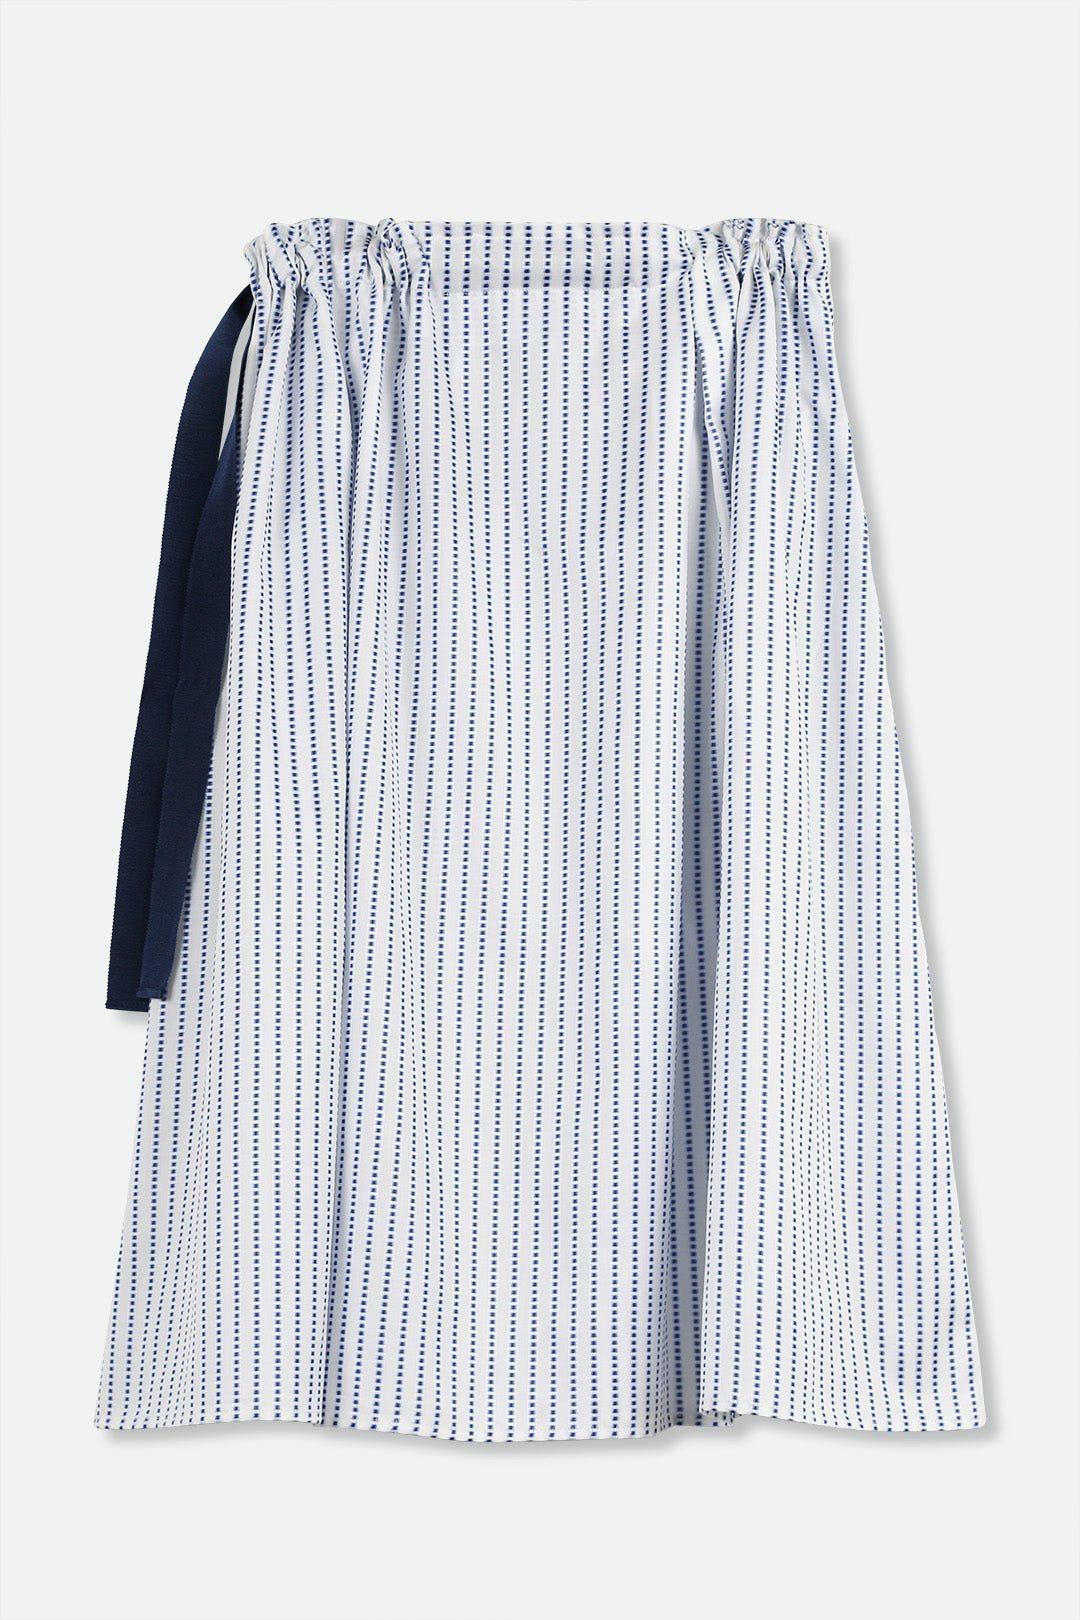 Midi A-Line Skirt with Drawstring